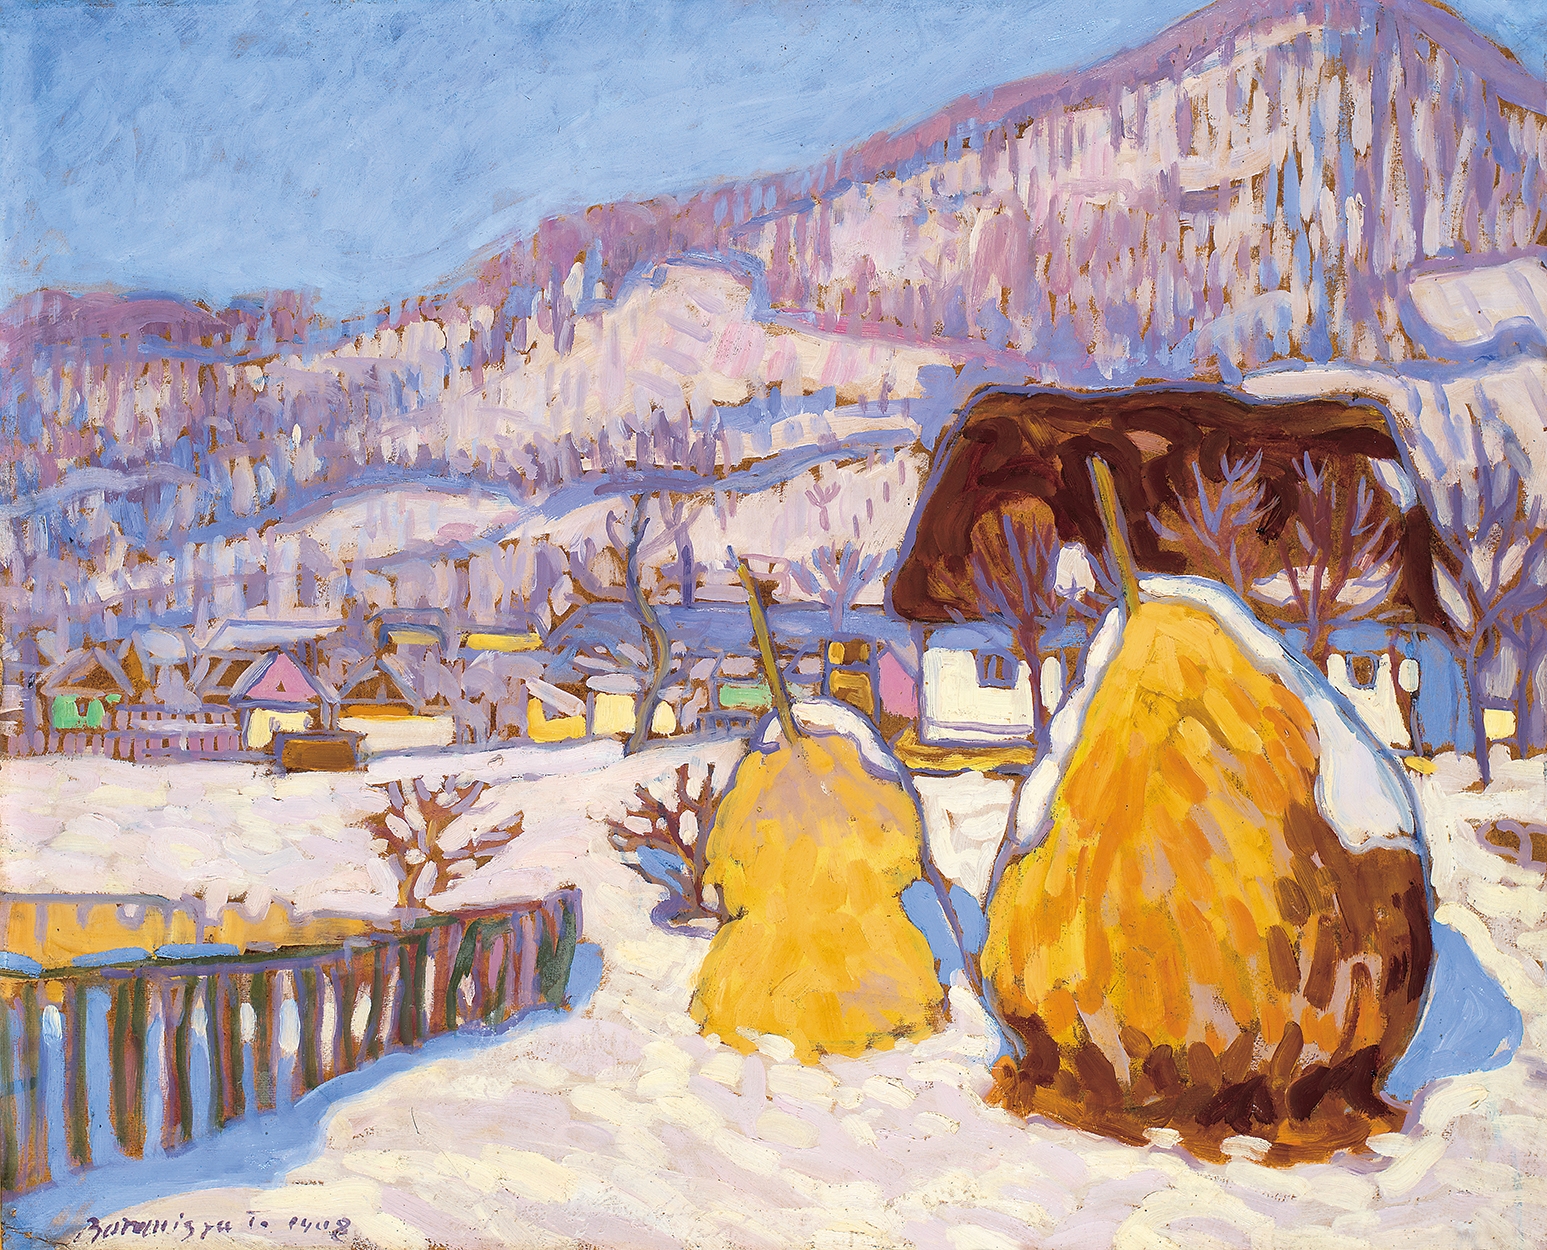 Boromisza Tibor (1880-1960) Snowy Landscape with Stacks, 1908